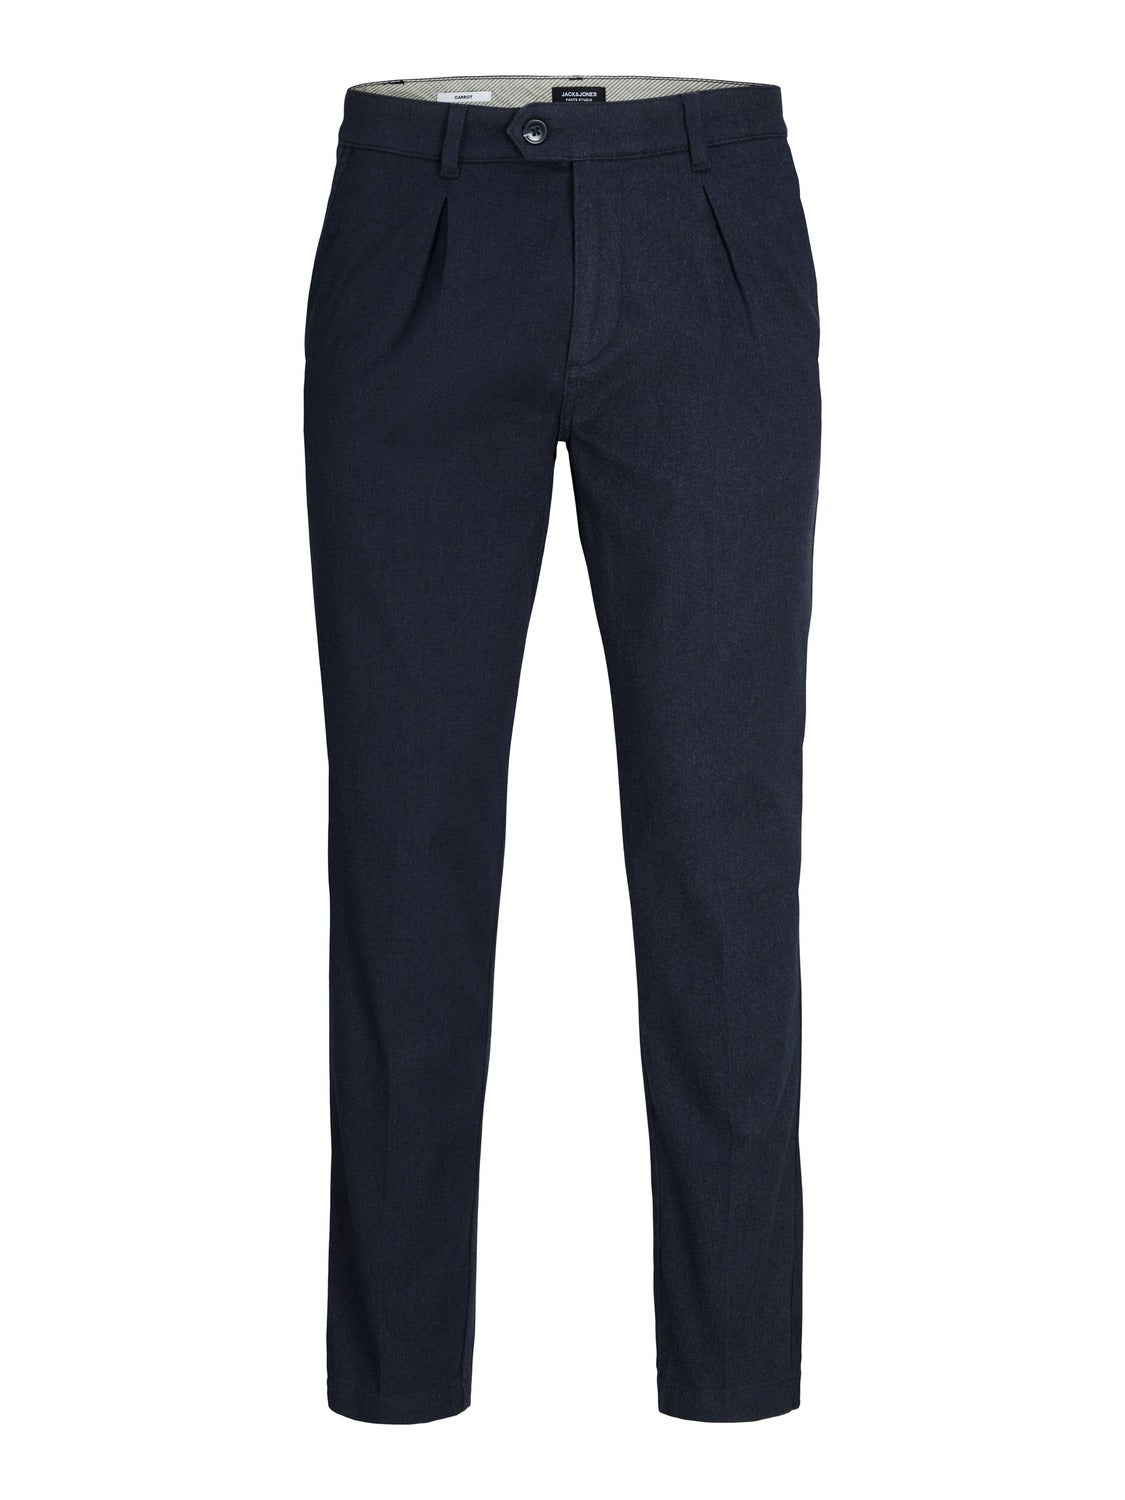 Buy Max Men's Regular Casual Pants (TFCKBFS2101CTGREY_Grey_34) at Amazon.in